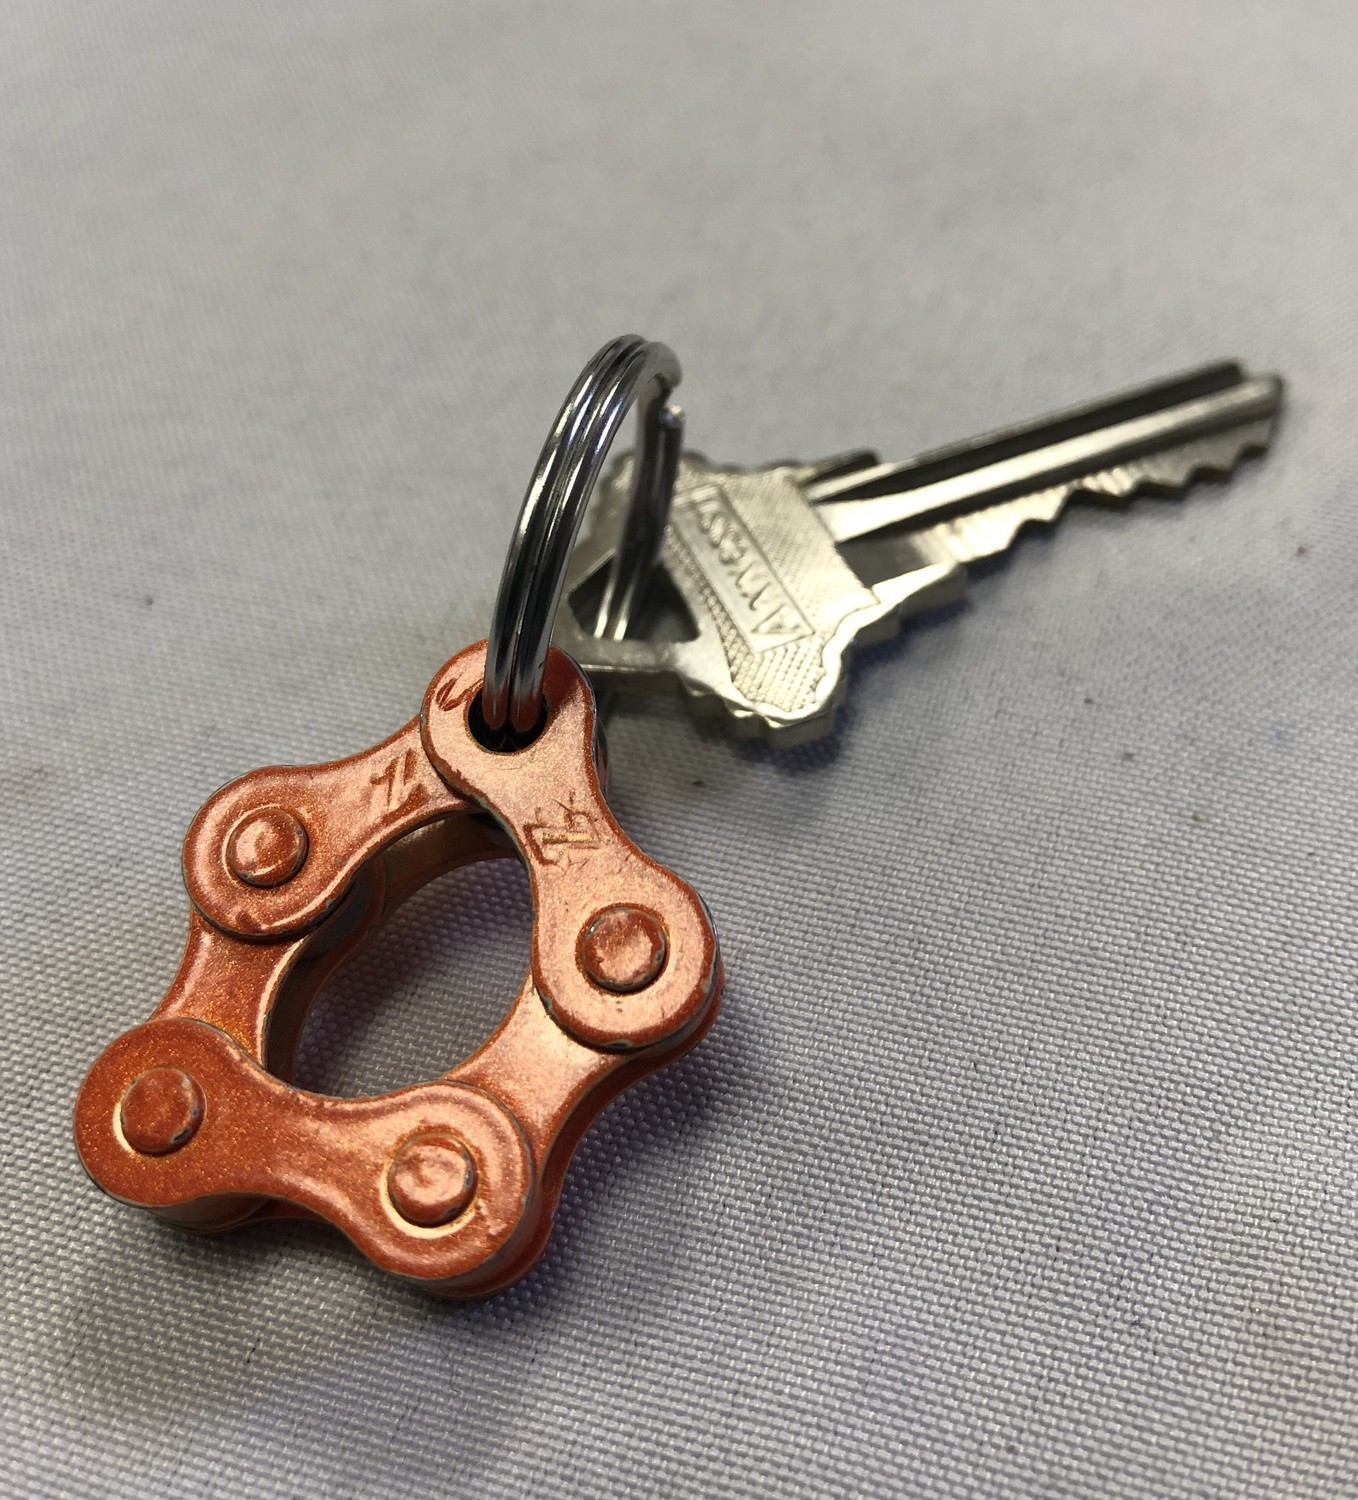 Bicycle Key Chain